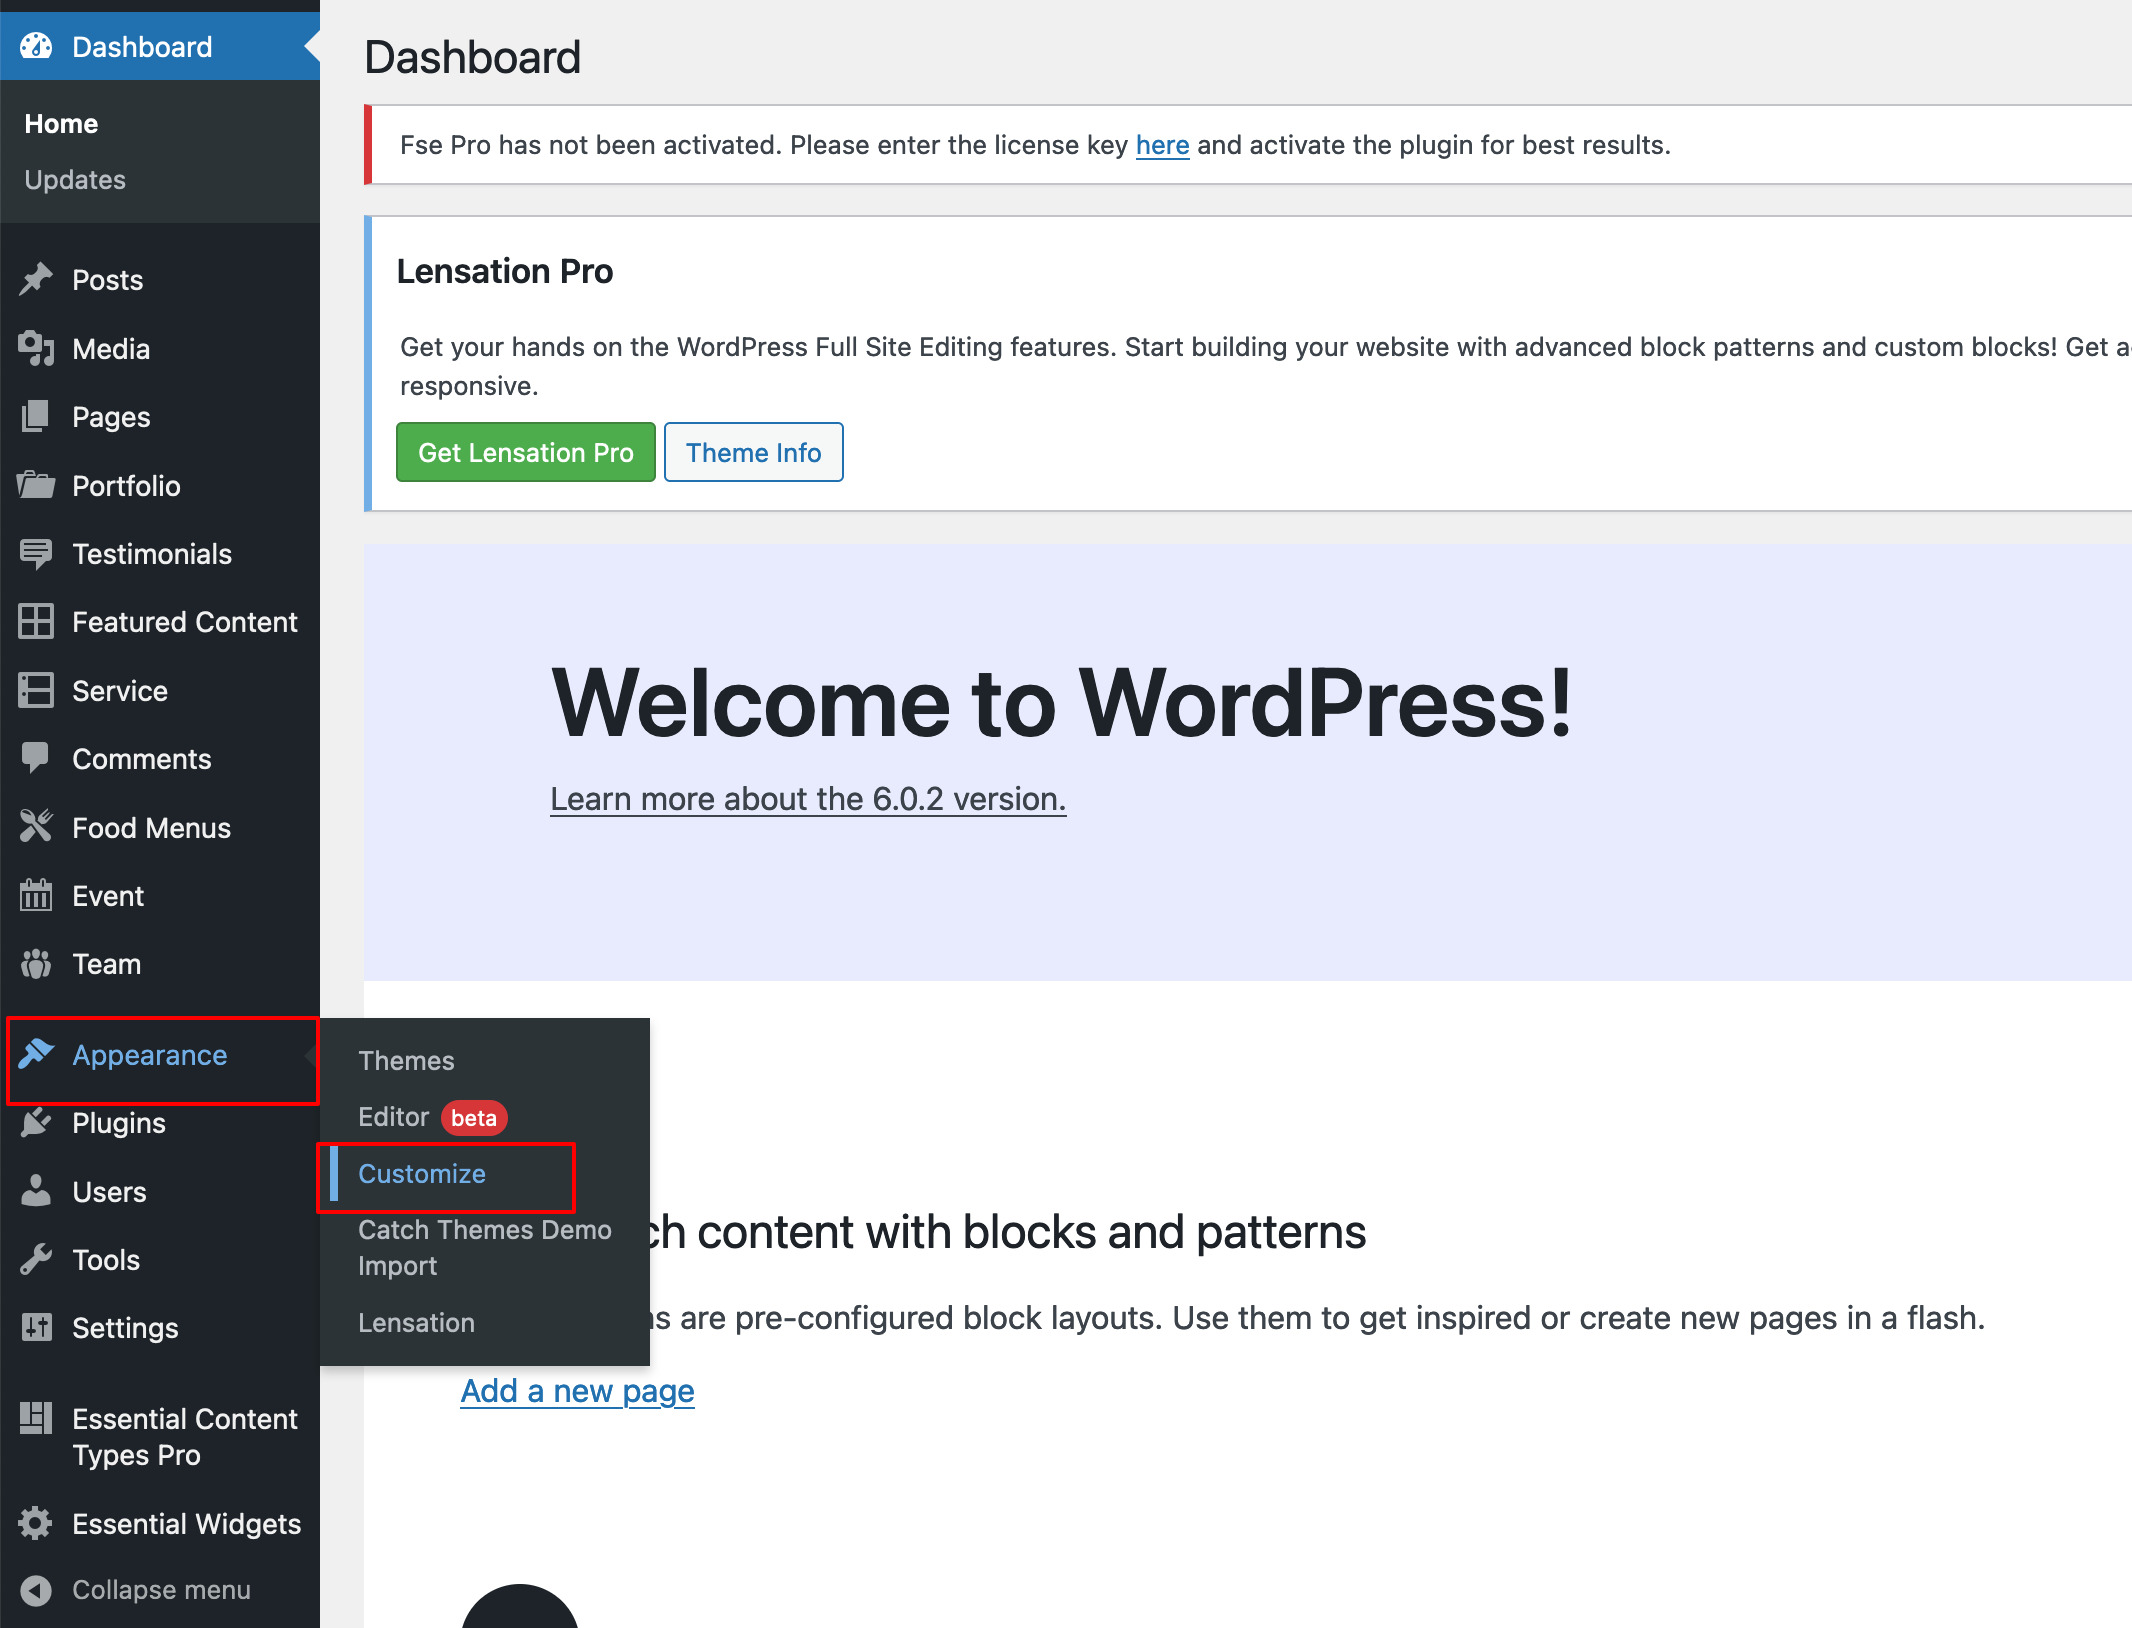 WordPress Appearance - Customize